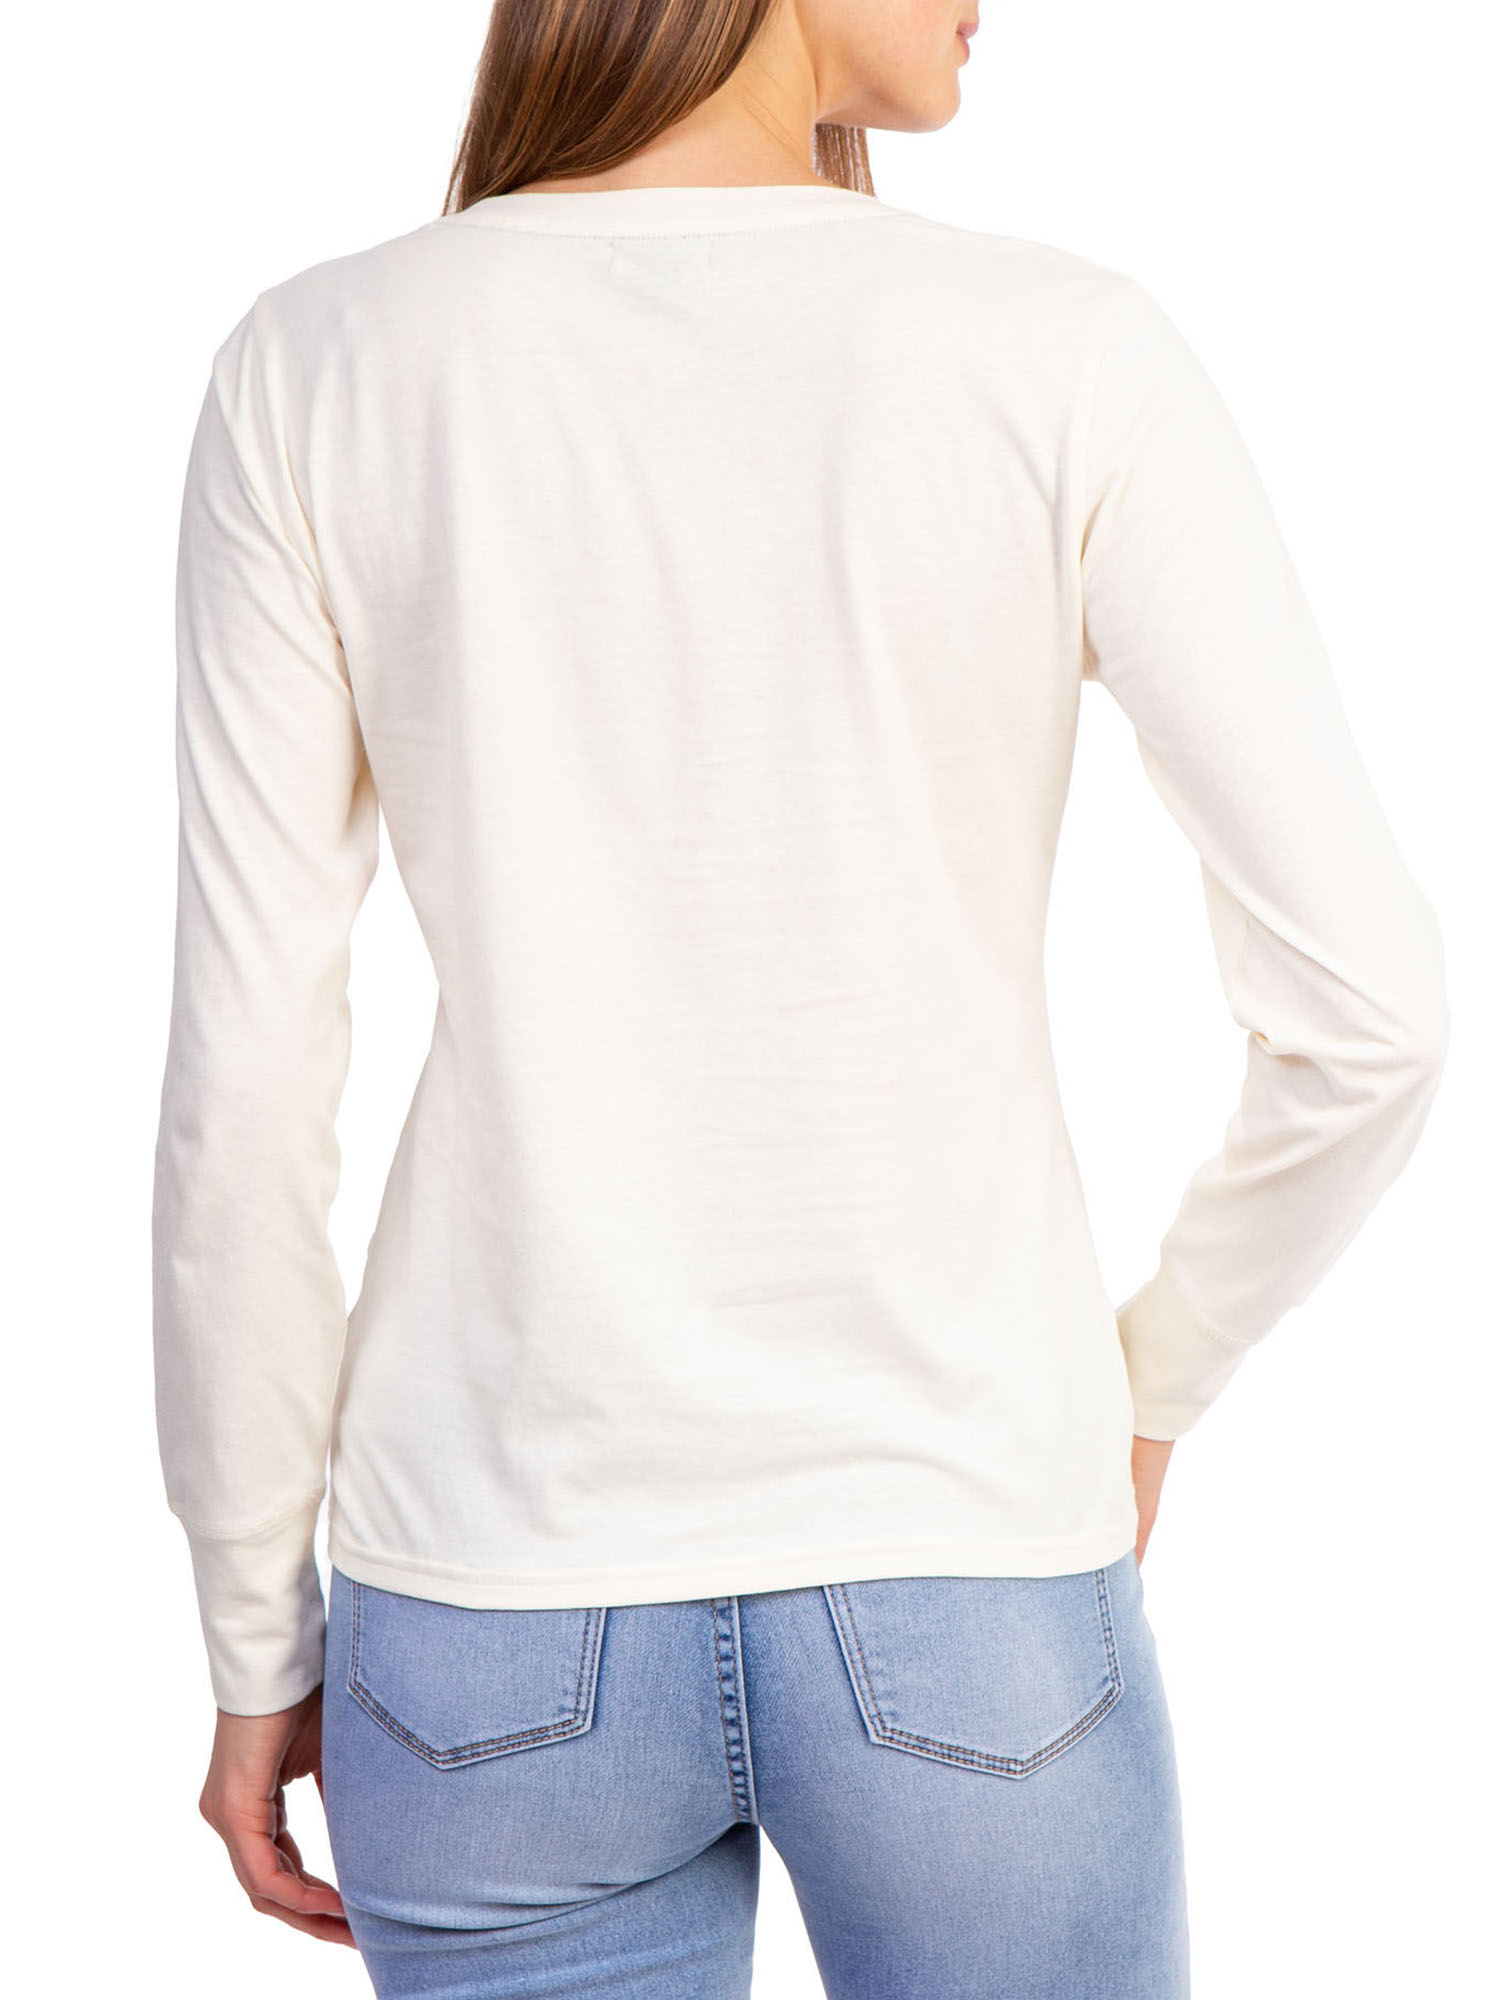 U.S. Polo Assn. Womens' Long Sleeve Graphic Jersey T Shirt - image 2 of 4